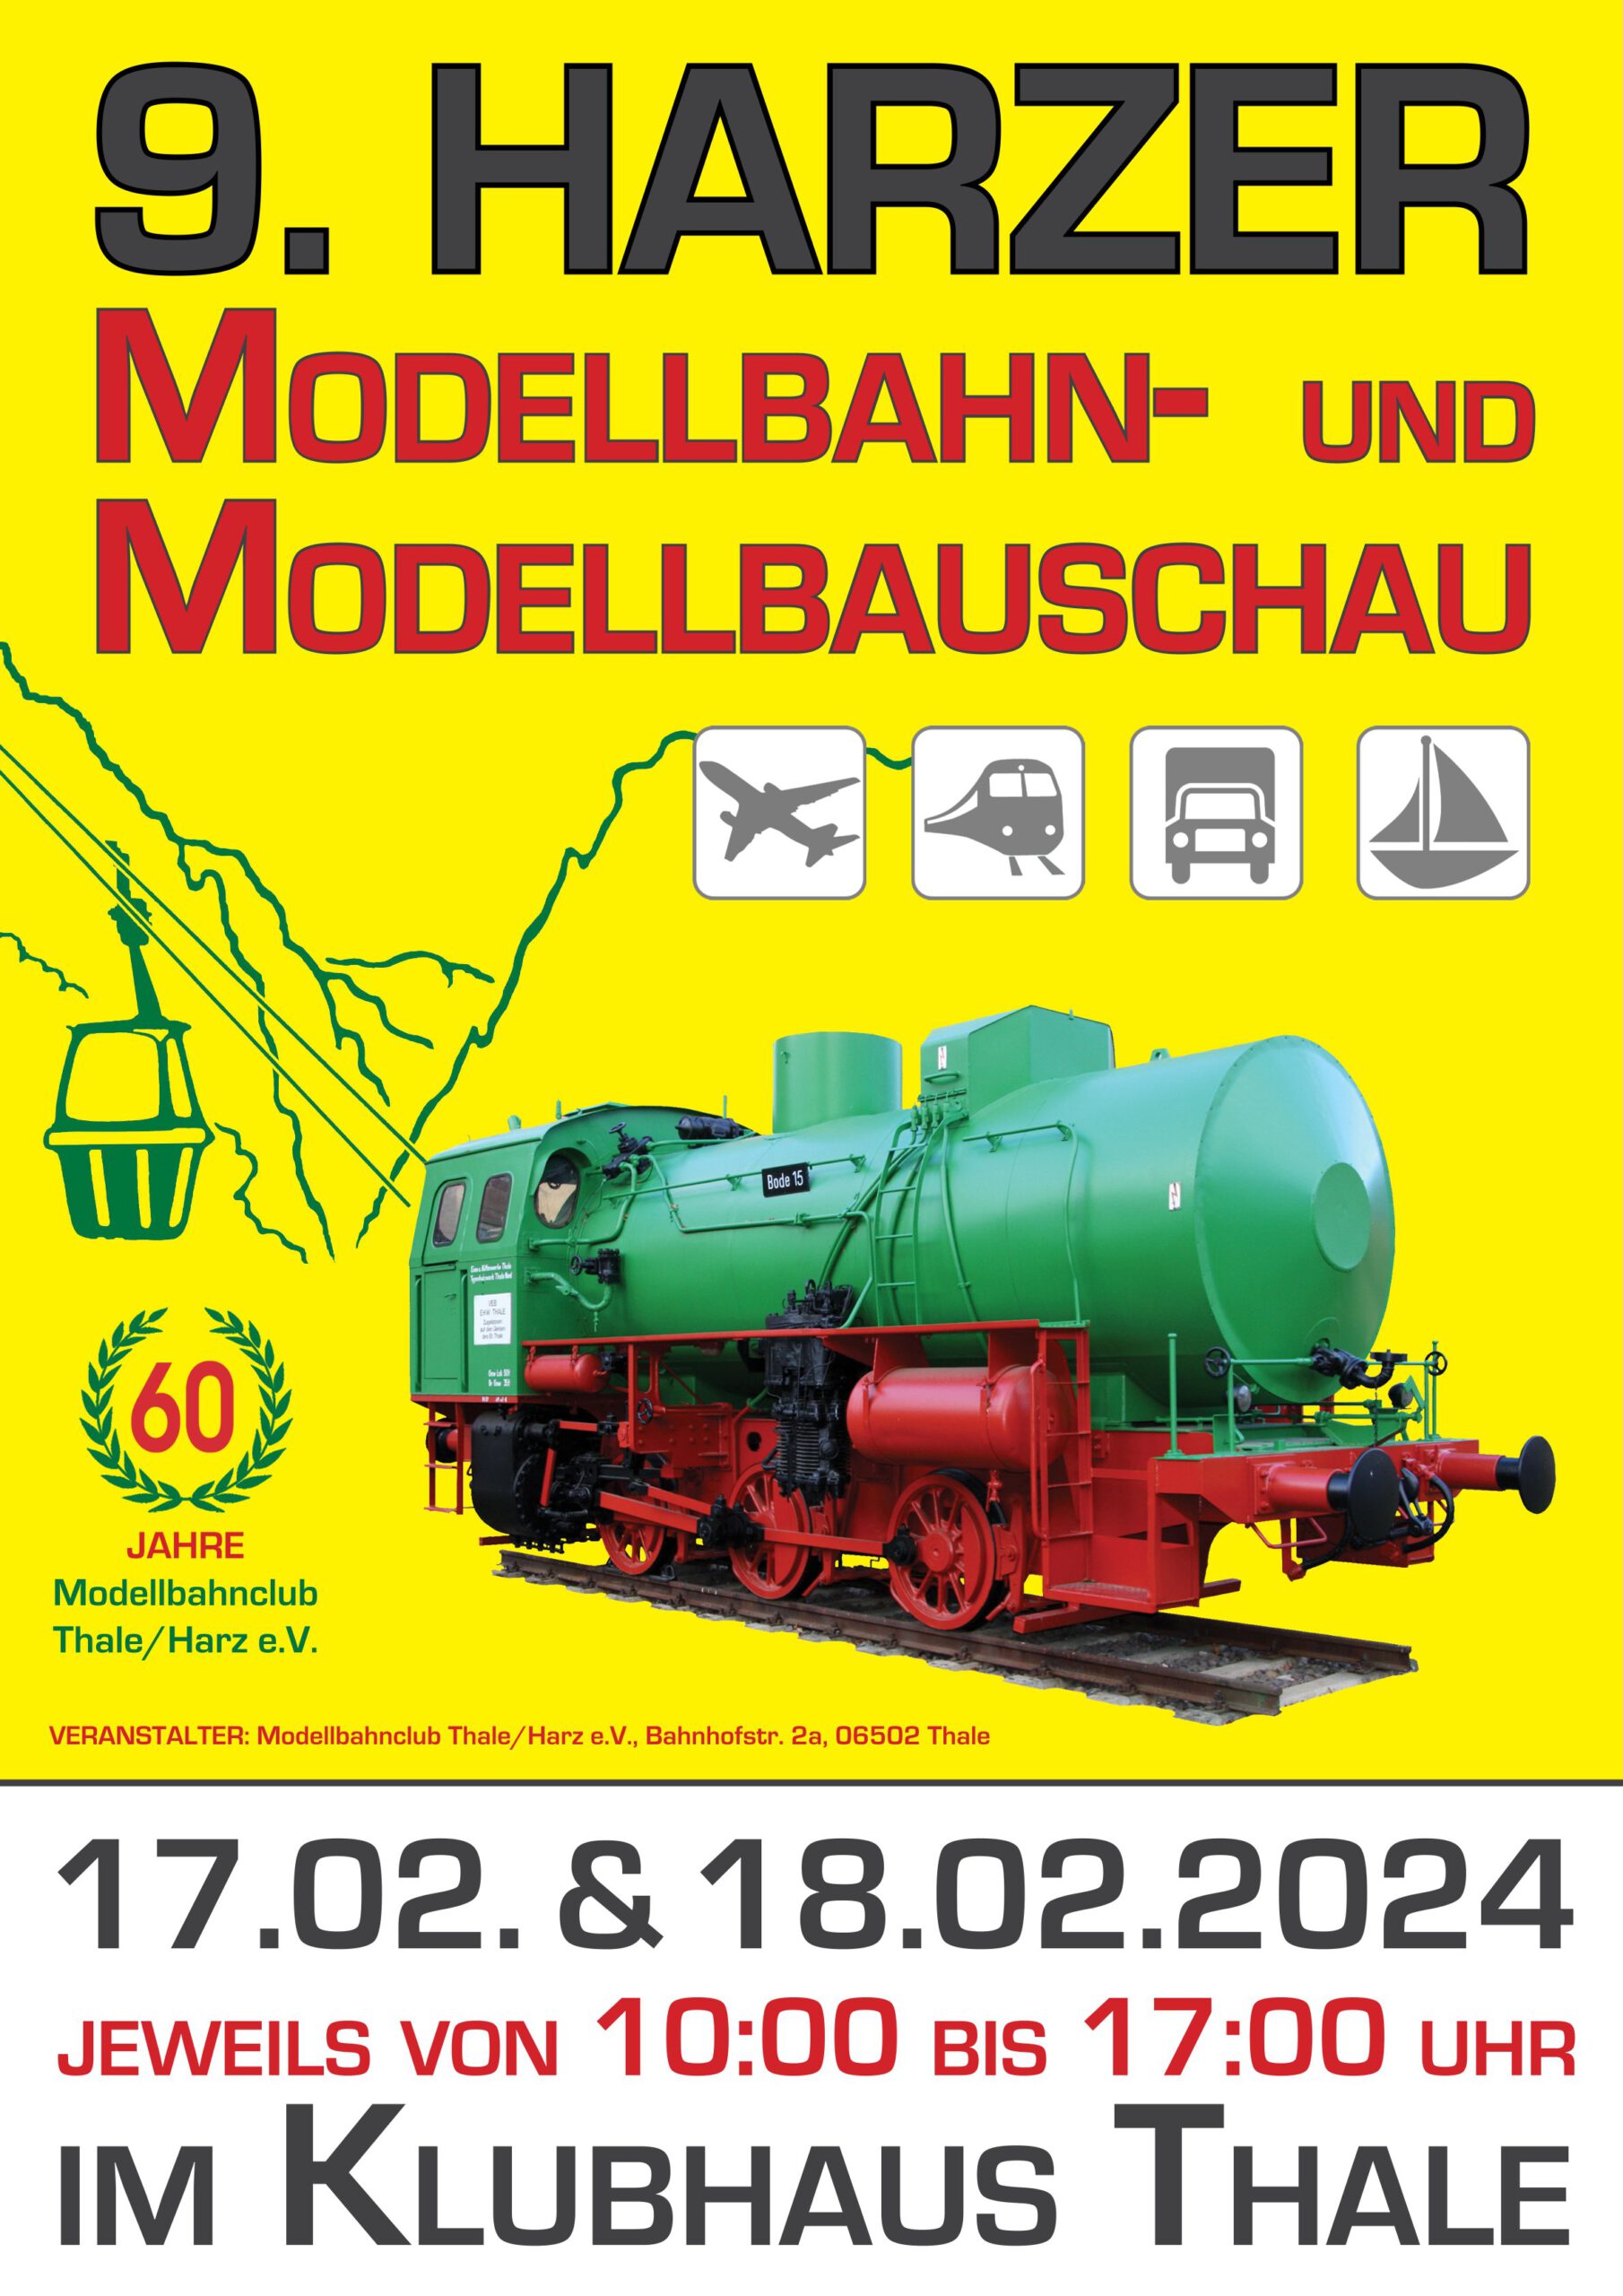 9. Harzer Modellbahn- & Modellbauschau